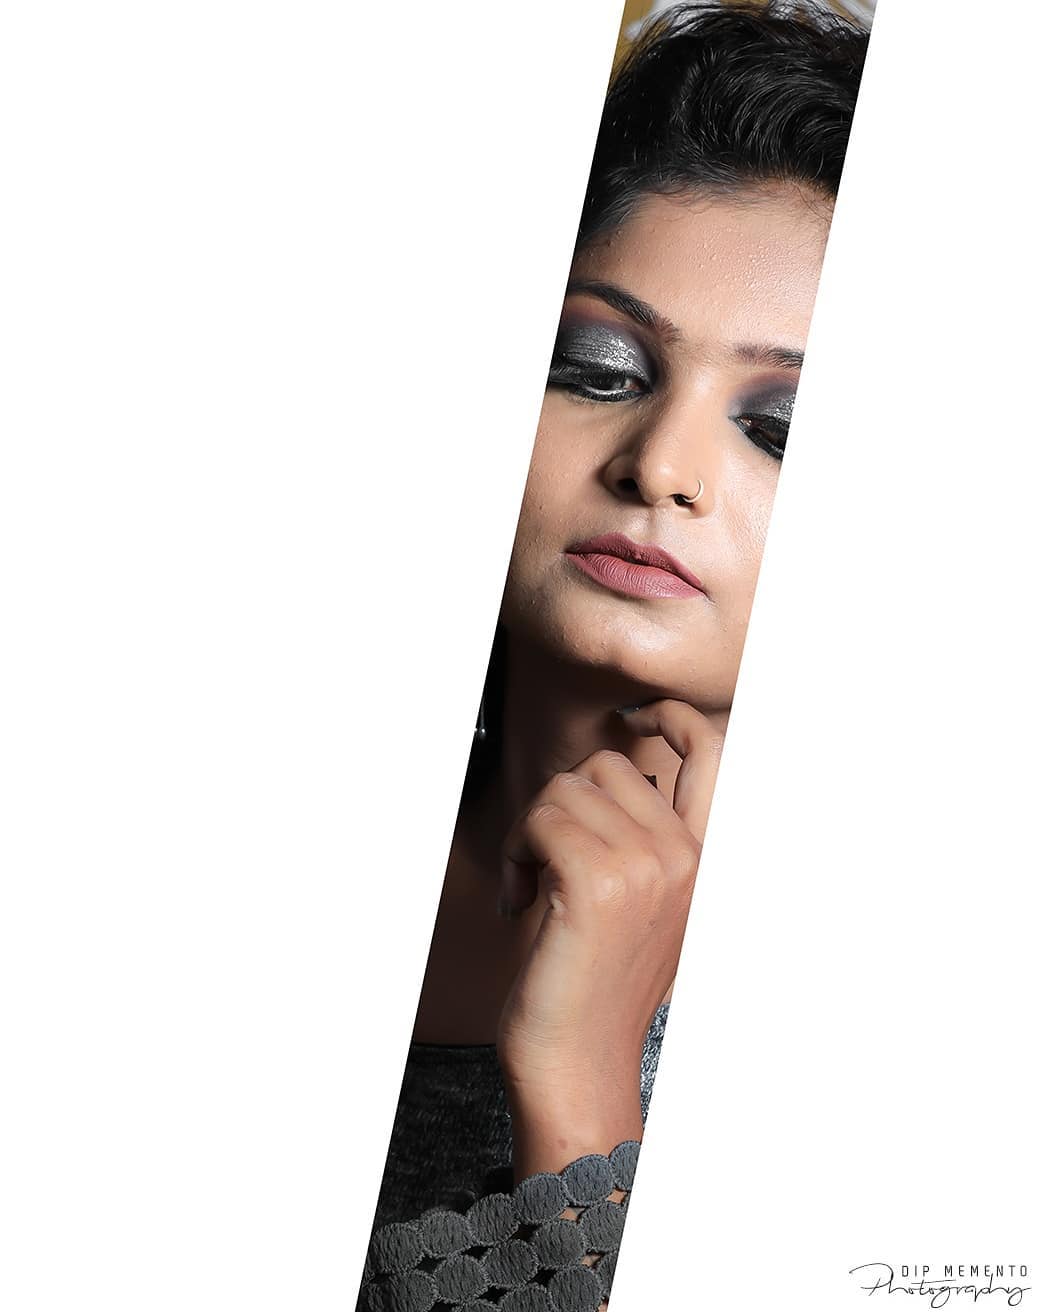 MUA : @dishabeautysaloonacademynikol
Shoot by : @dip_memento_photography
Face: @divyagoshwami.
.
#portraits #dslrofficial #indianphotographers 
#portraitsindia #canon #colorsofindia
#photosofindia 
#fashion
#photographersofindia
#portraitsindia #fashionblogger #dipmementophotography
#makeupartist #photography #portraitvision #portraitmood #indianportraits #colorsofindia #portraitphotography #ahmedabad #indianpictures 
#portraitmood #portraits_india #bokehphotography #bongportrait #bokehphotography #yesindia